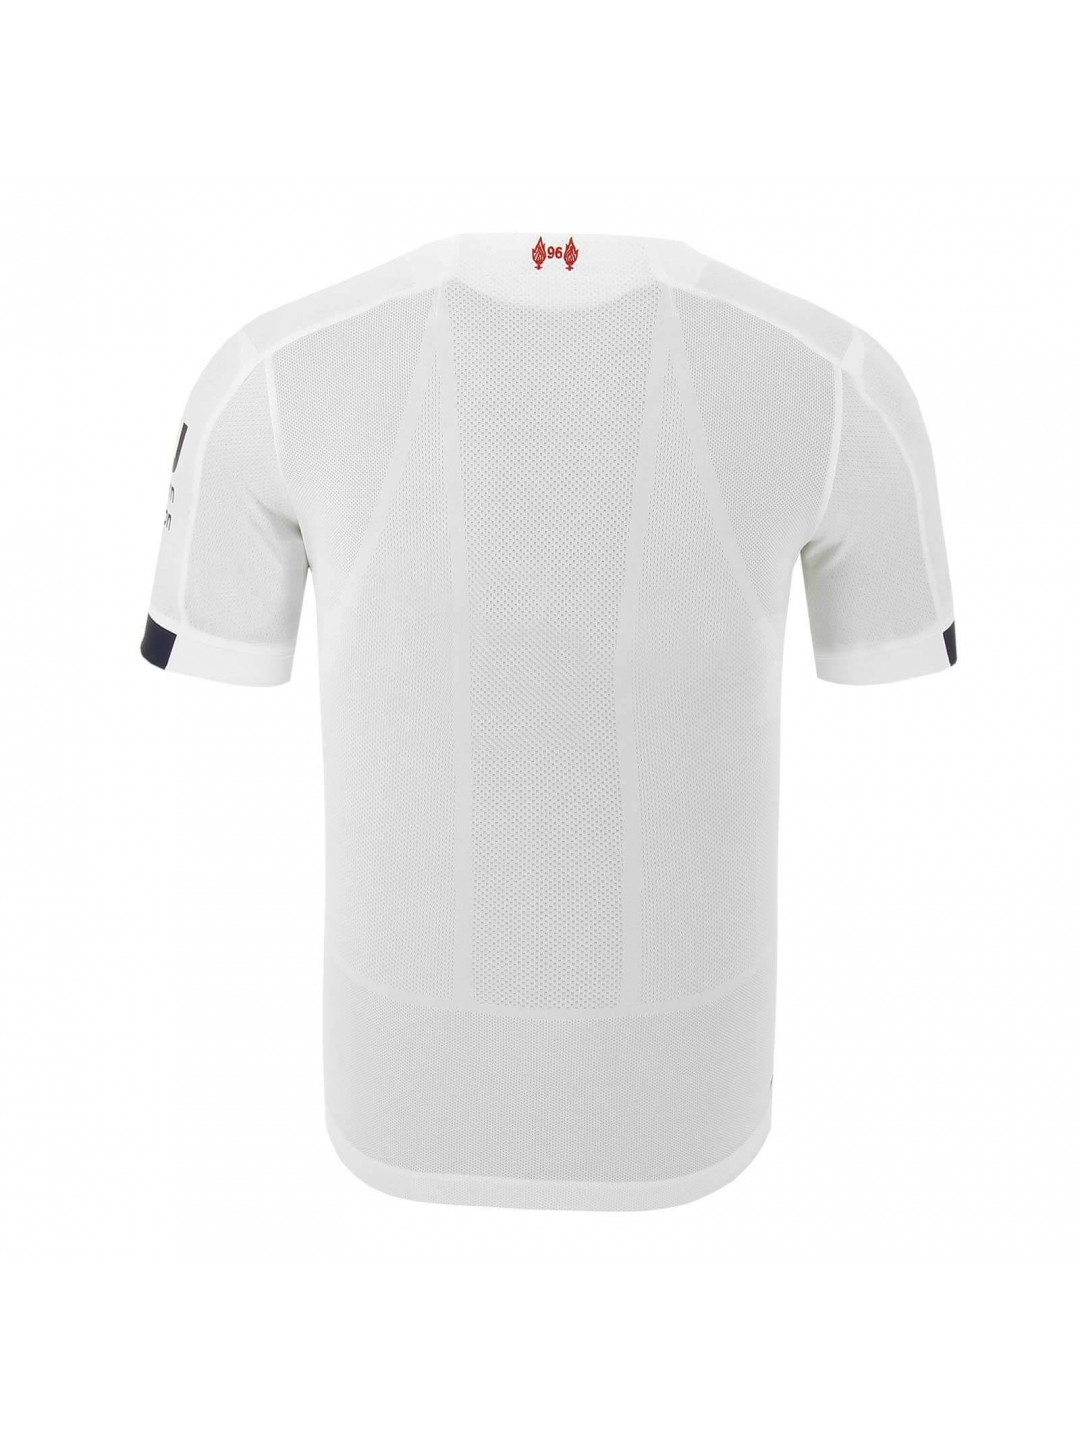 Sagan Tosu New Balance Kits 2019 - Todo Sobre Camisetas